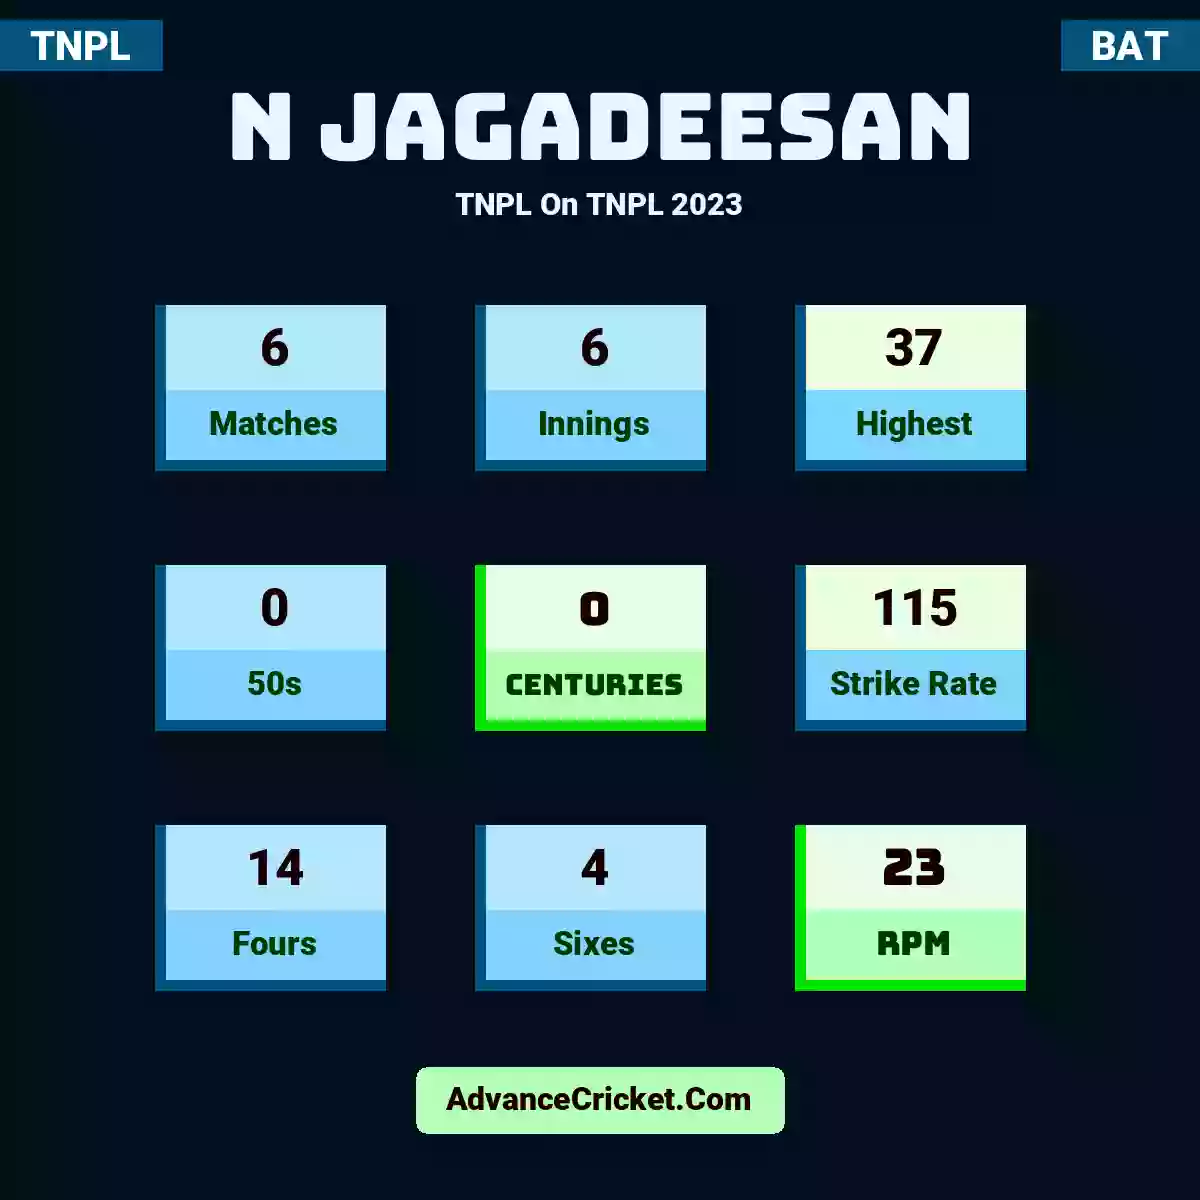 N Jagadeesan TNPL  On TNPL 2023, N Jagadeesan played 6 matches, scored 37 runs as highest, 0 half-centuries, and 0 centuries, with a strike rate of 115. N.Jagadeesan hit 14 fours and 4 sixes, with an RPM of 23.